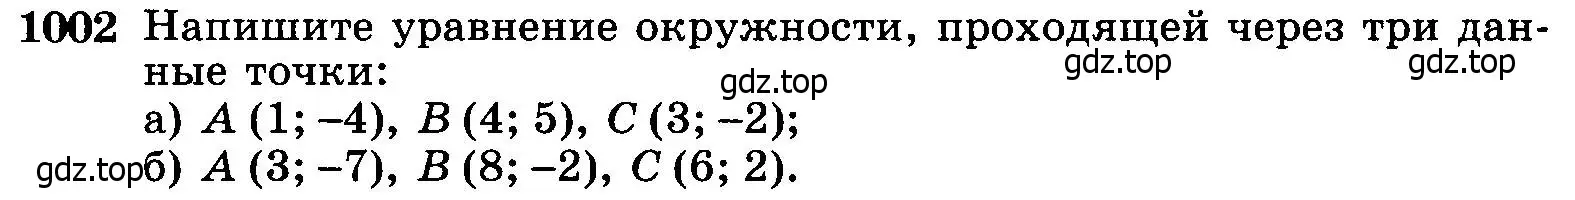 Условие номер 1002 (страница 246) гдз по геометрии 7-9 класс Атанасян, Бутузов, учебник